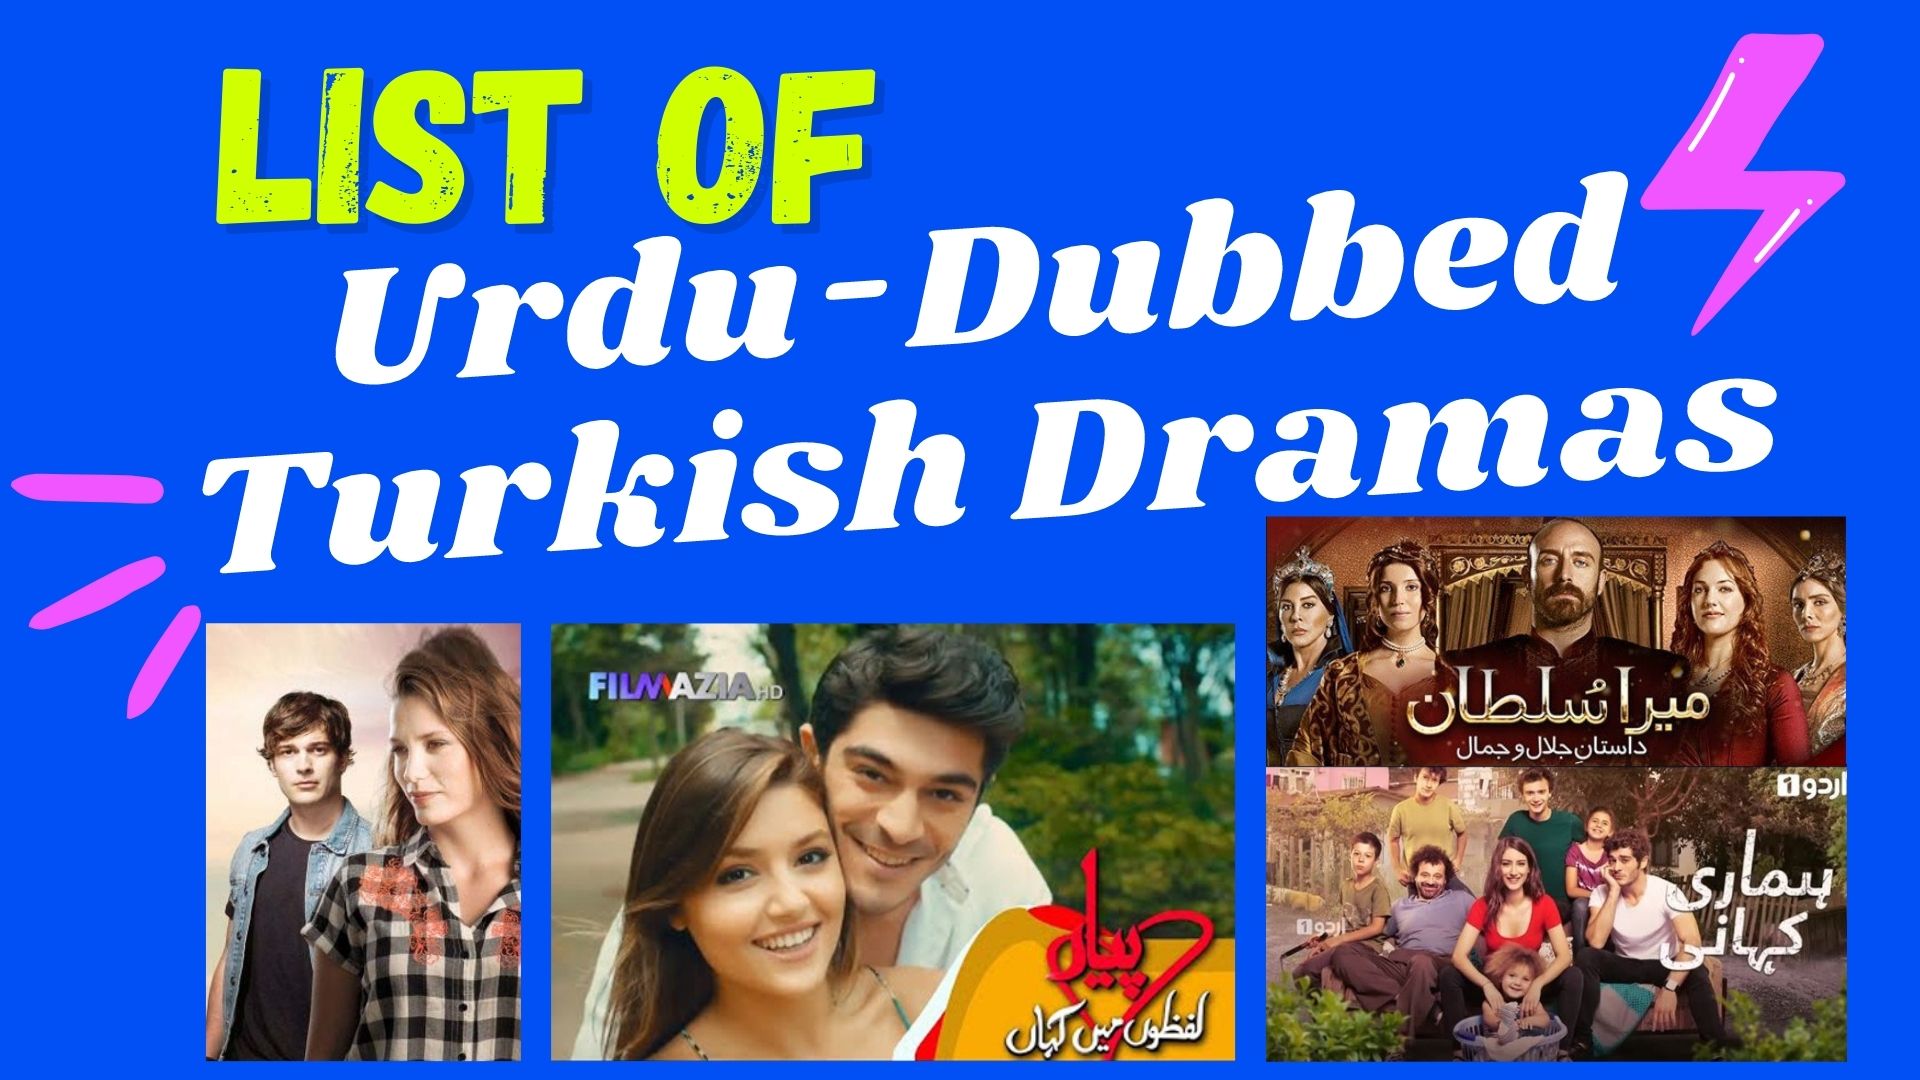 List of Urdu-Dubbed Turkish Dramas